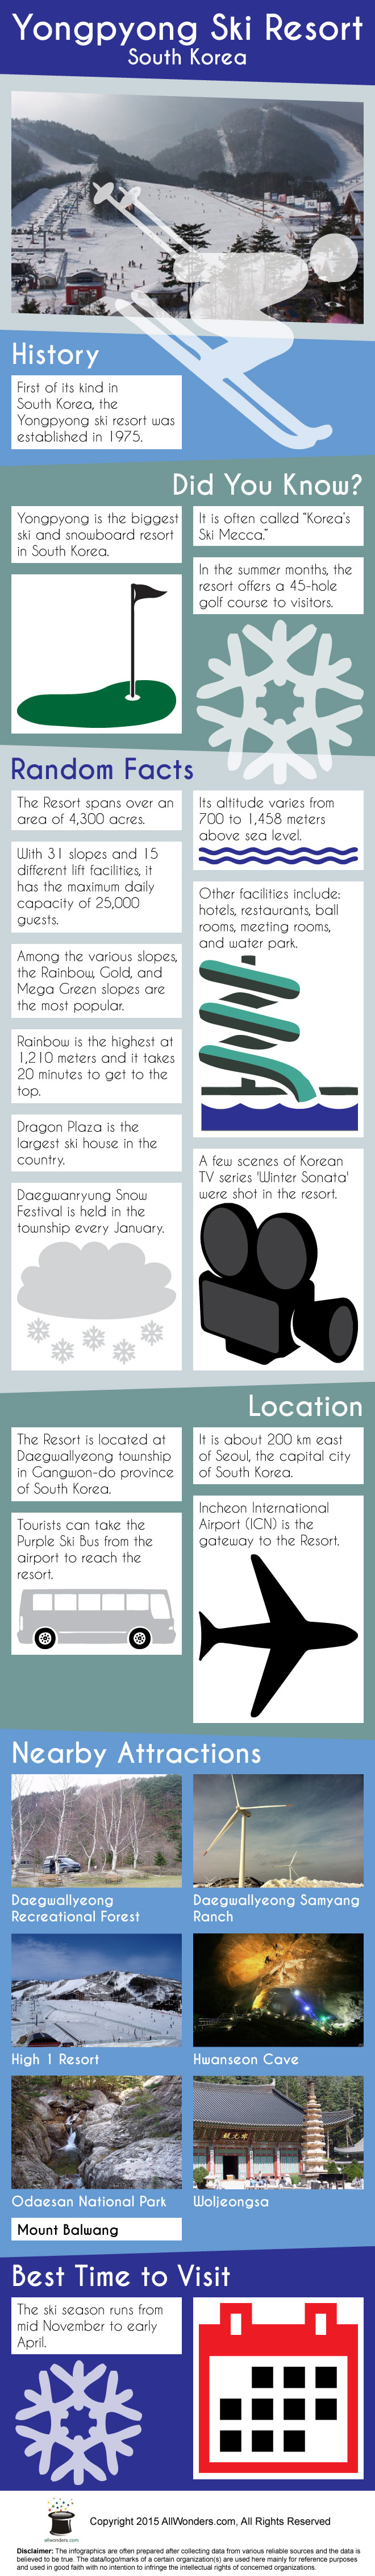 Yongpyong Ski Resort Infographic